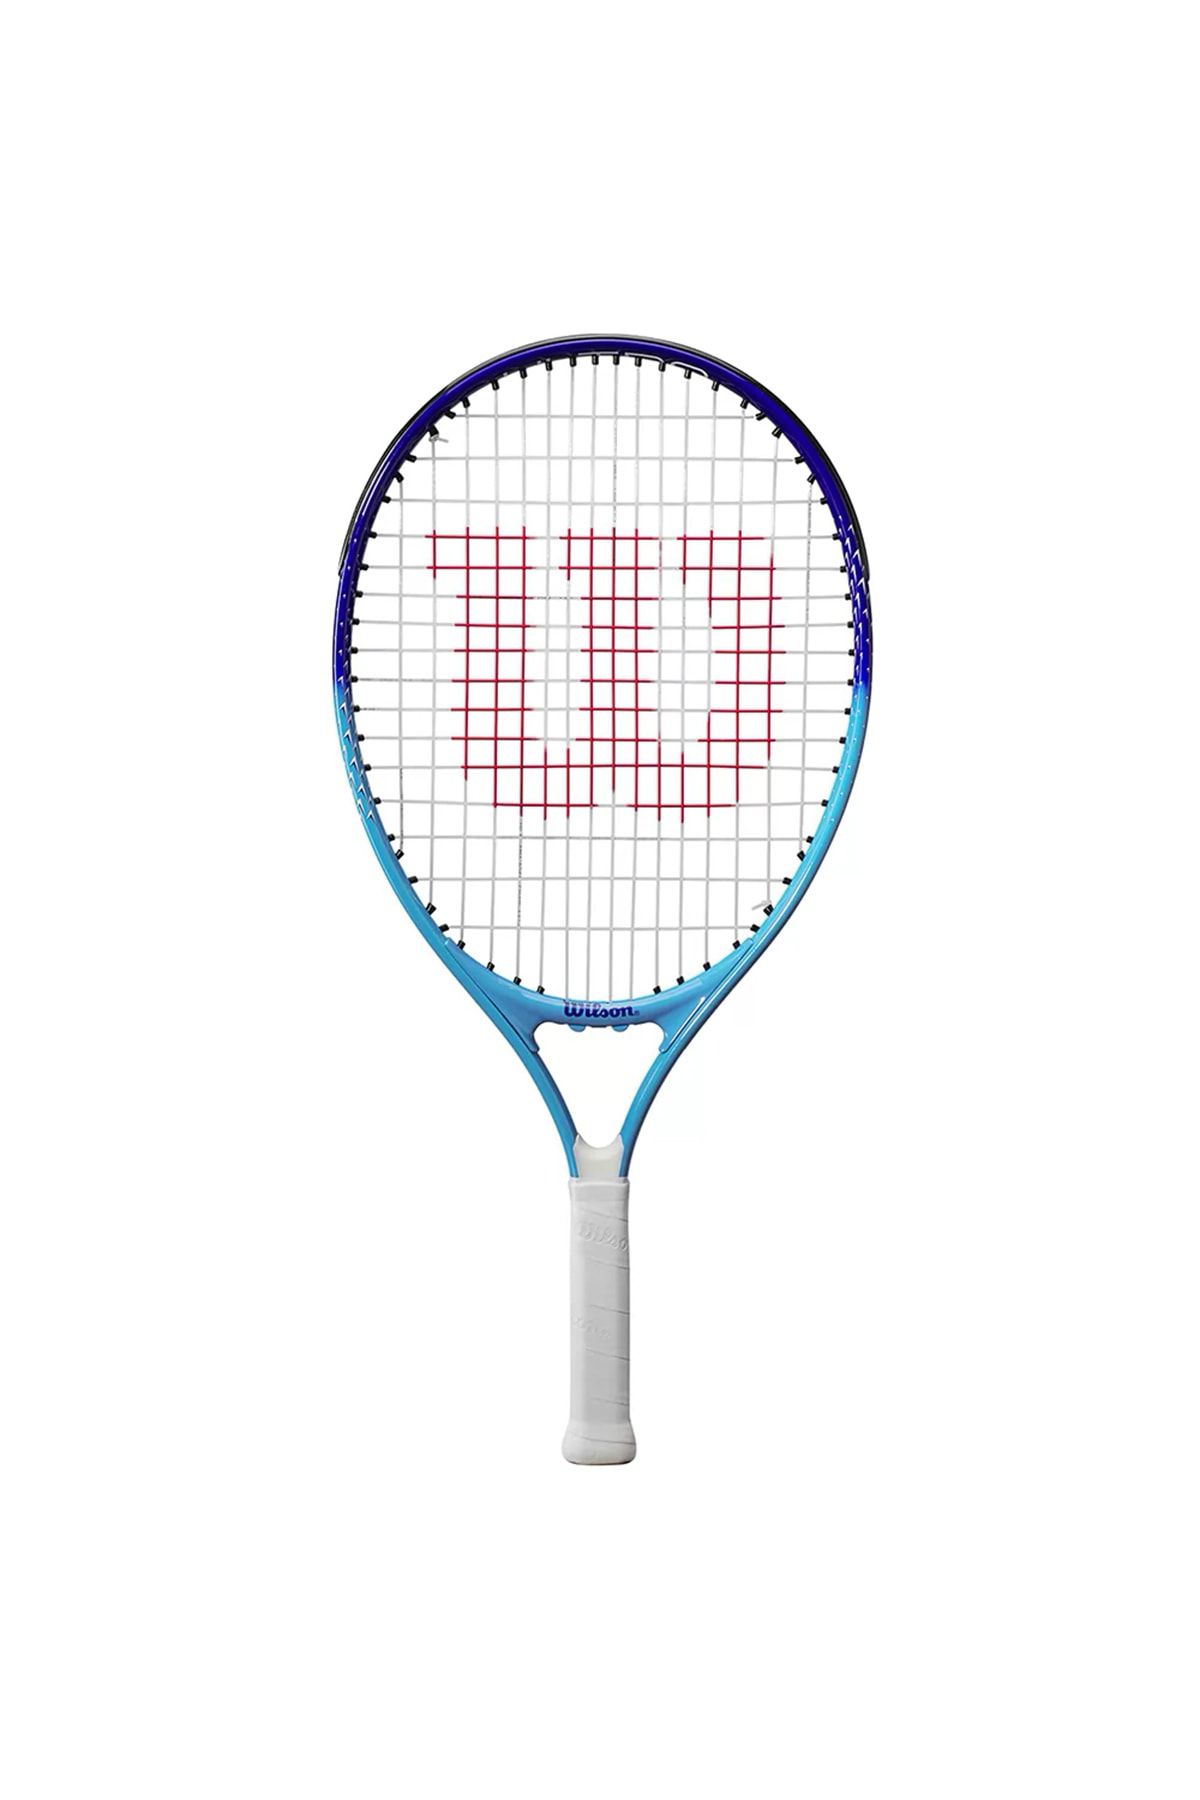 Wilson Wr053610h Ultra Blue 21 Tenis Raketi